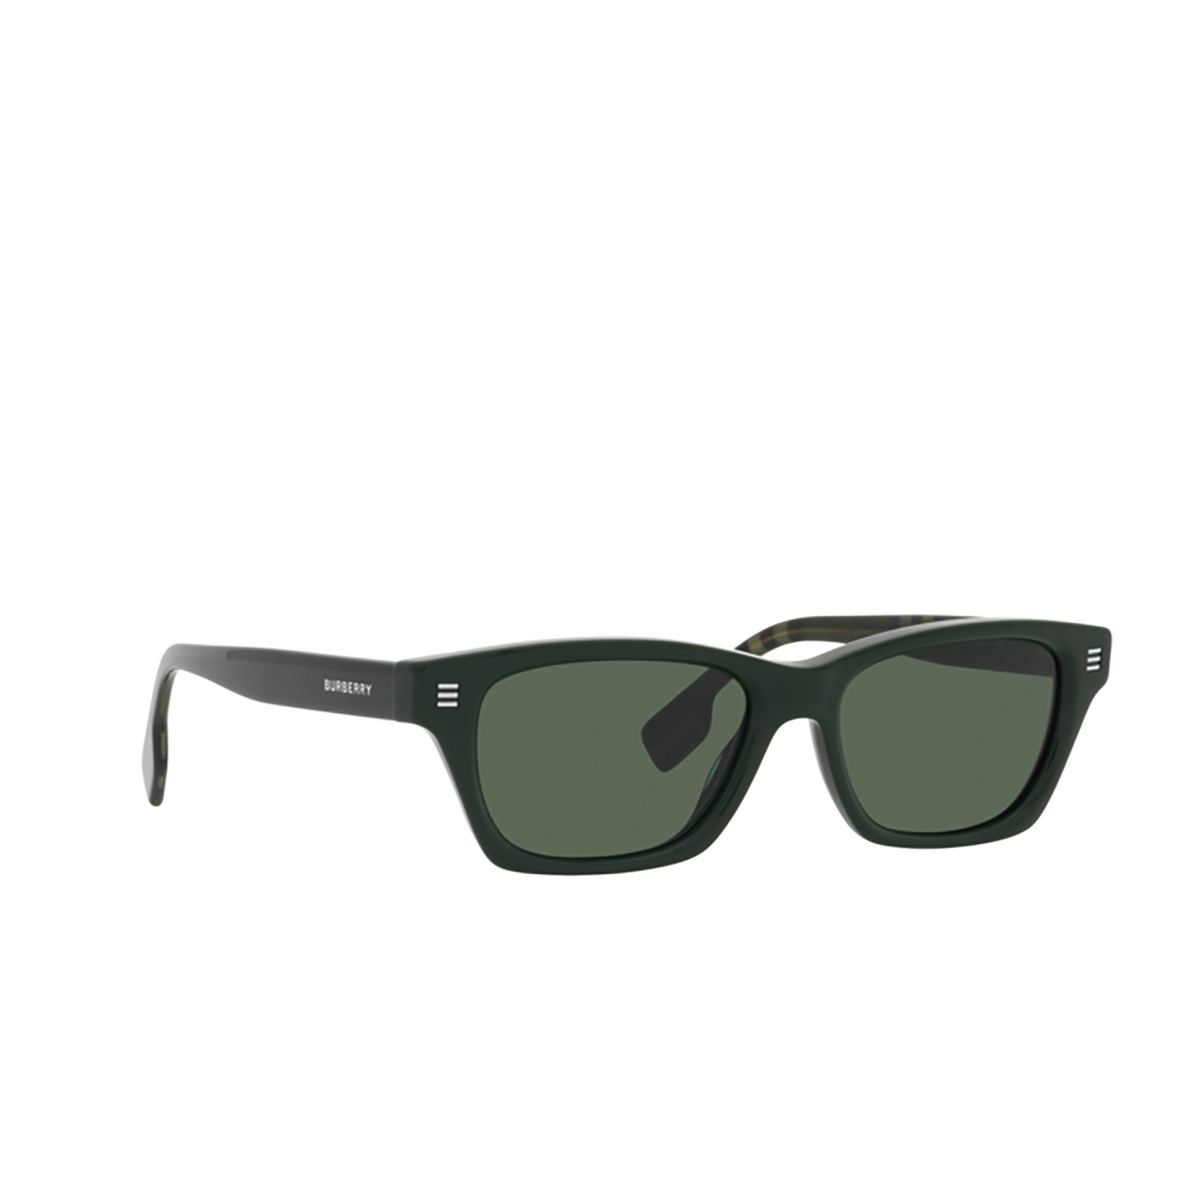 Burberry KENNEDY Sunglasses 398771 Green - three-quarters view